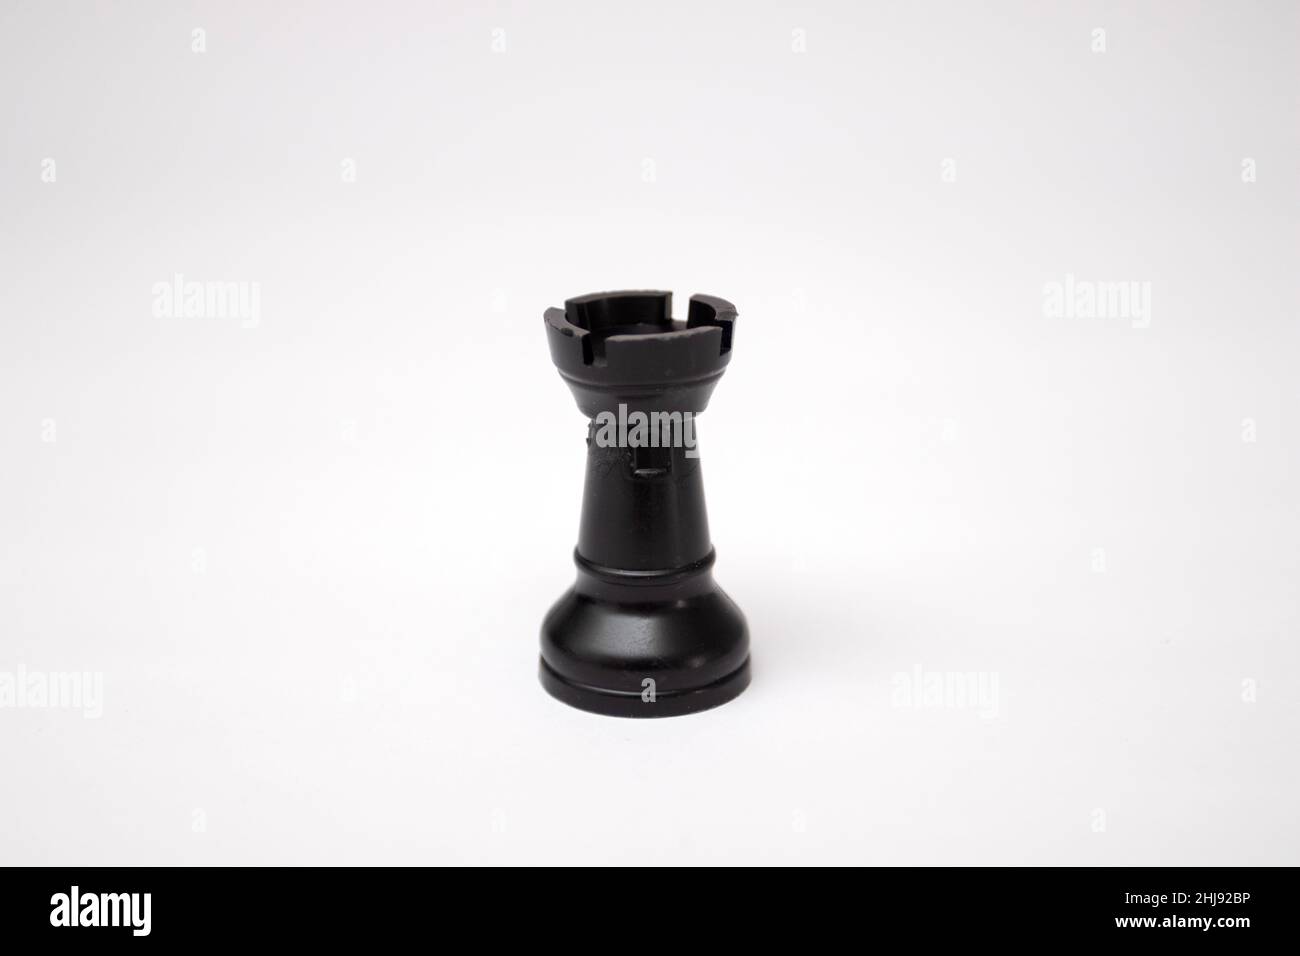 Black rook chess piece on a white background Stock Photo - Alamy